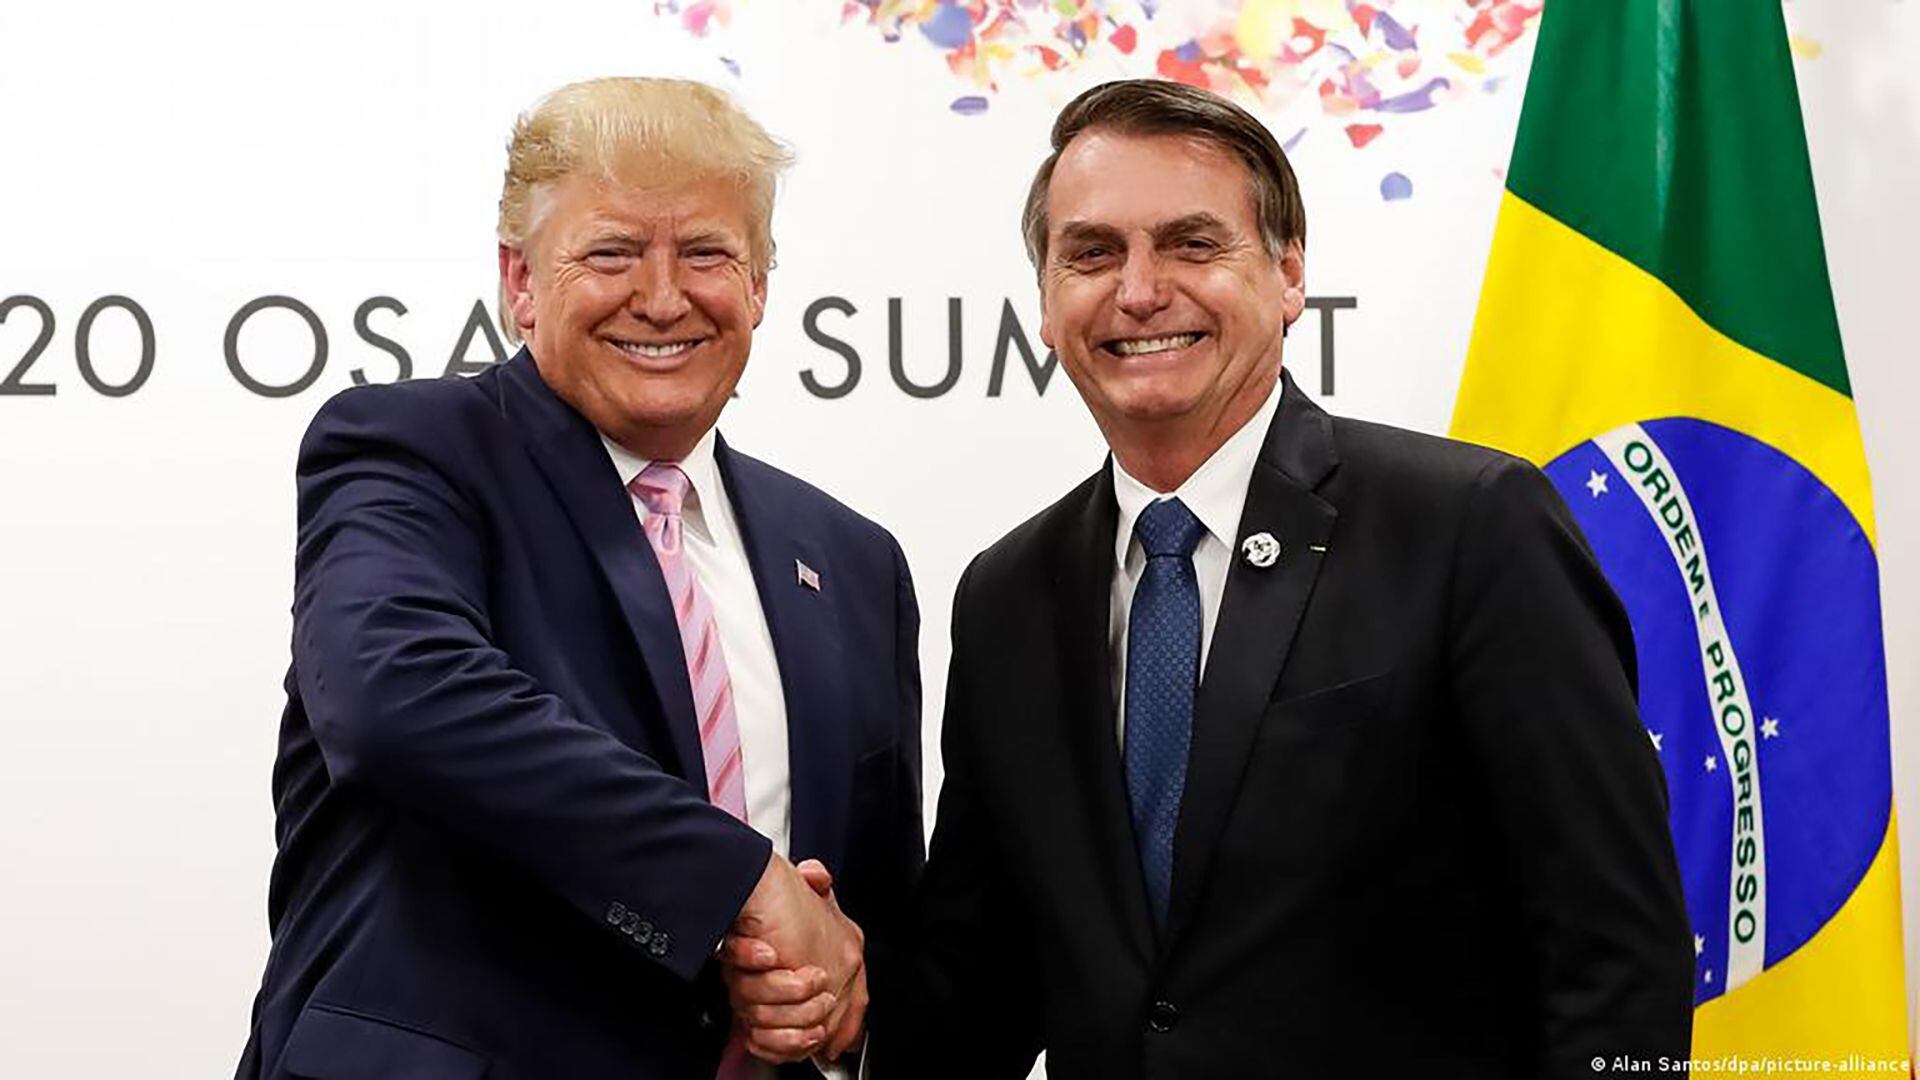 Donald Trump and Jair Bolsonaro